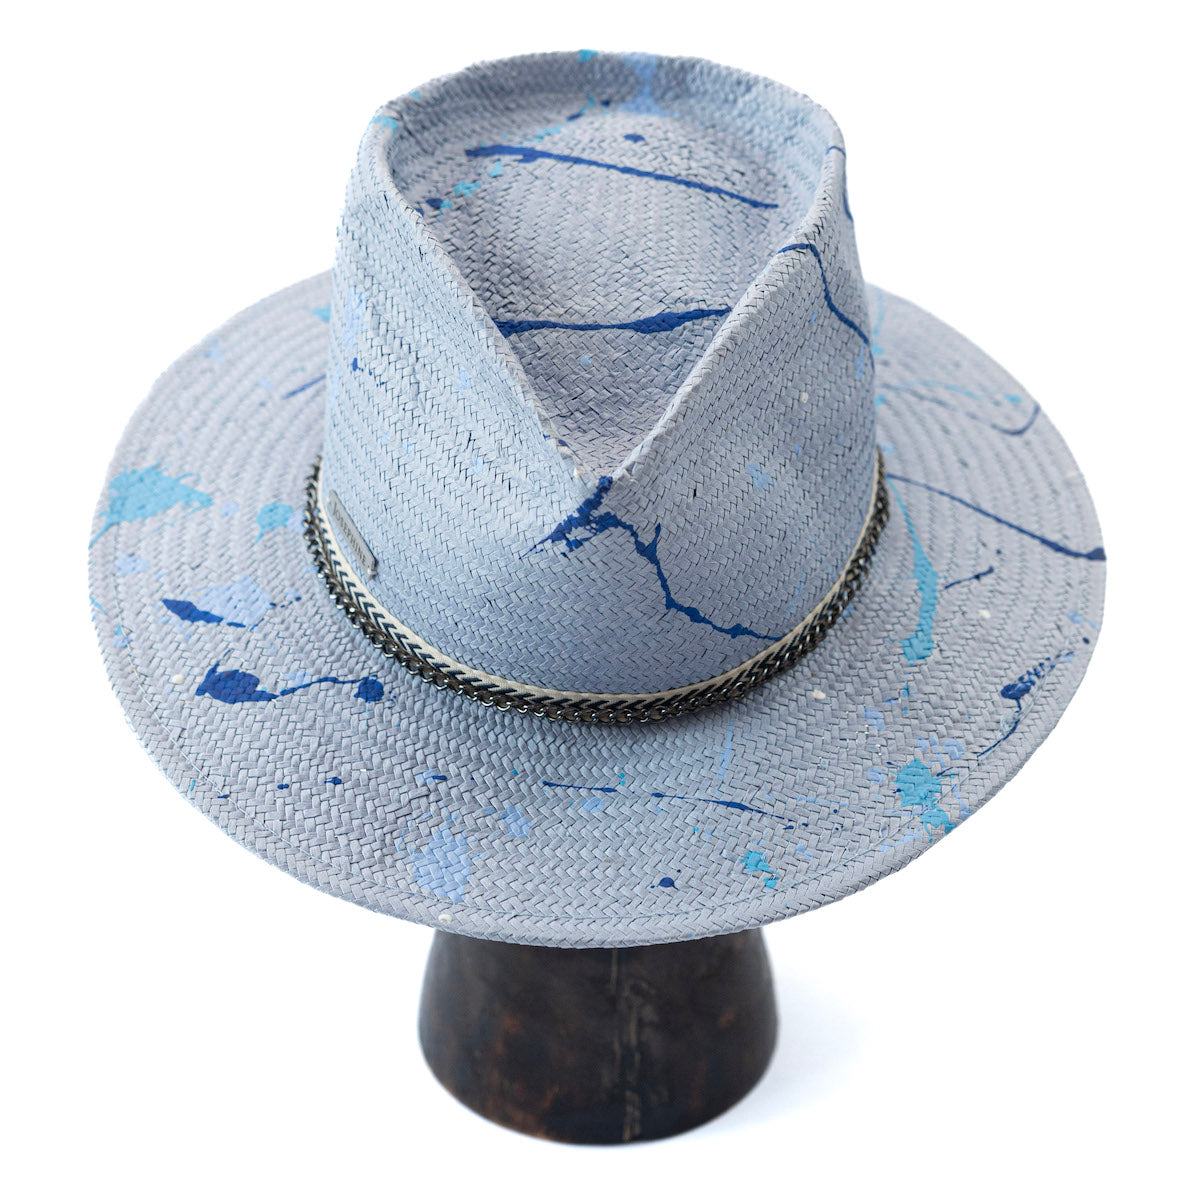 Urban style summer hat "Mery in Blue"